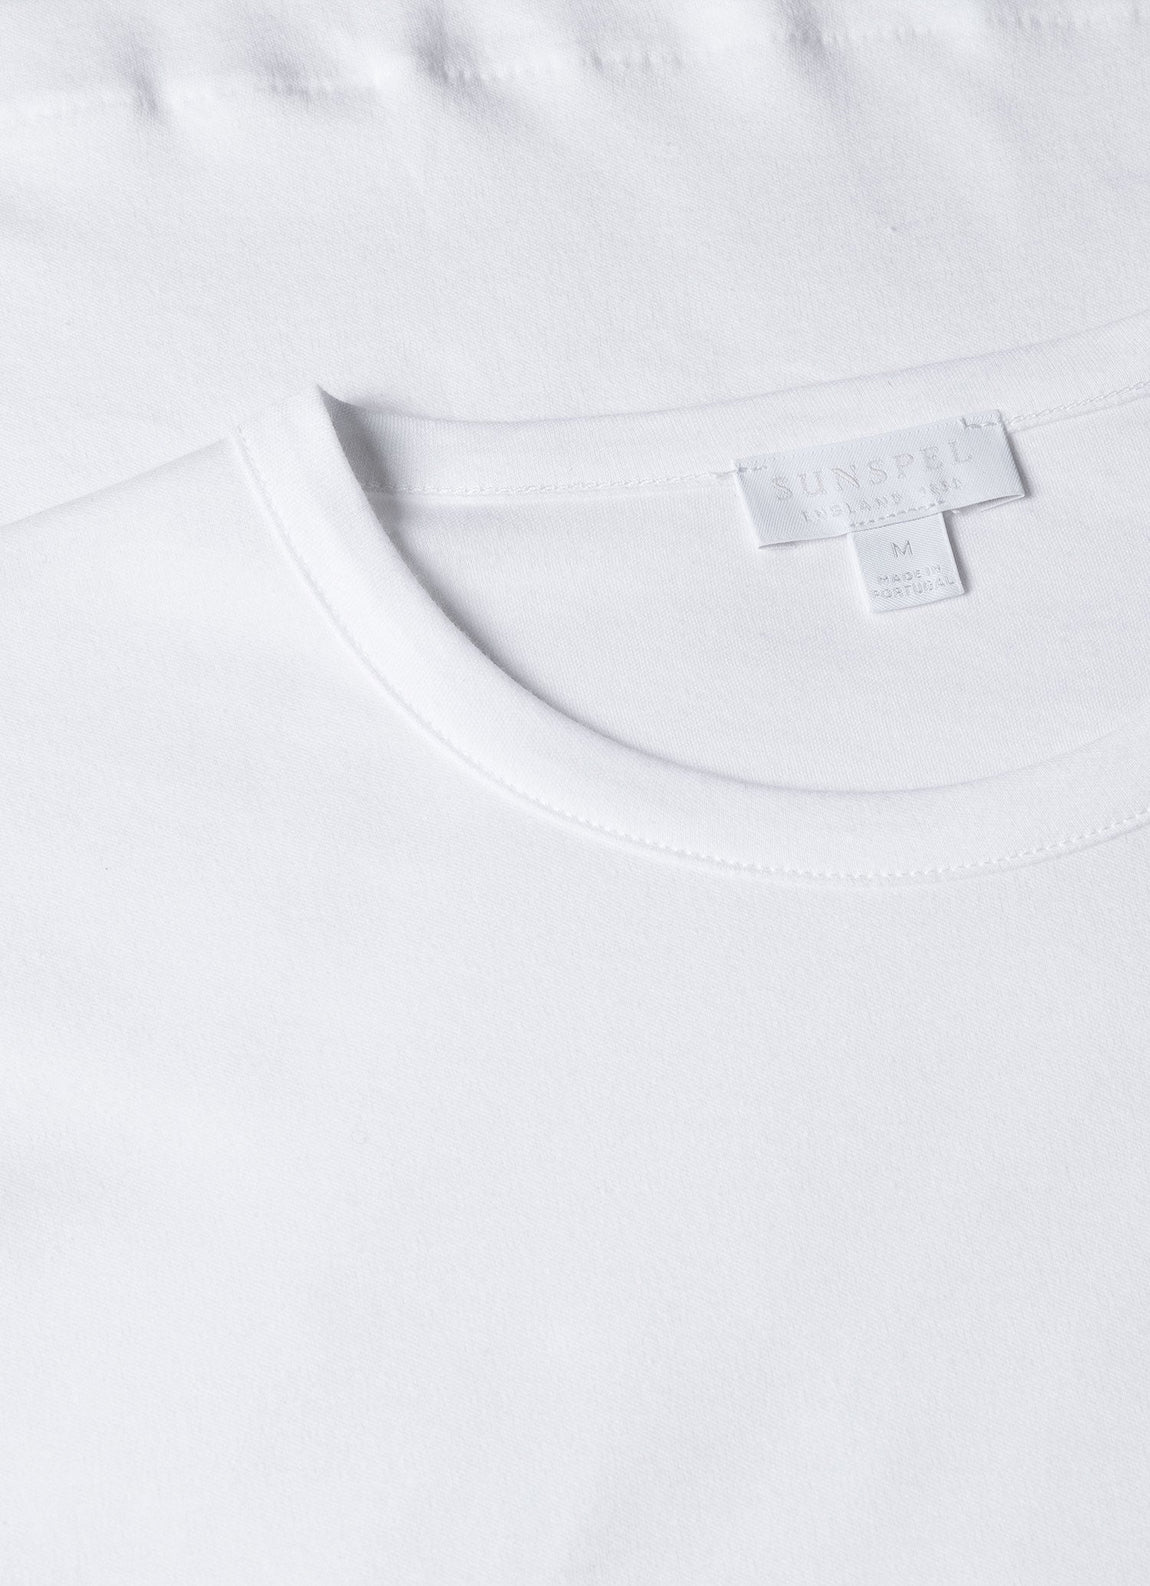 Stone Island Mens Big Logo Short Sleeve White T-Shirt Size M